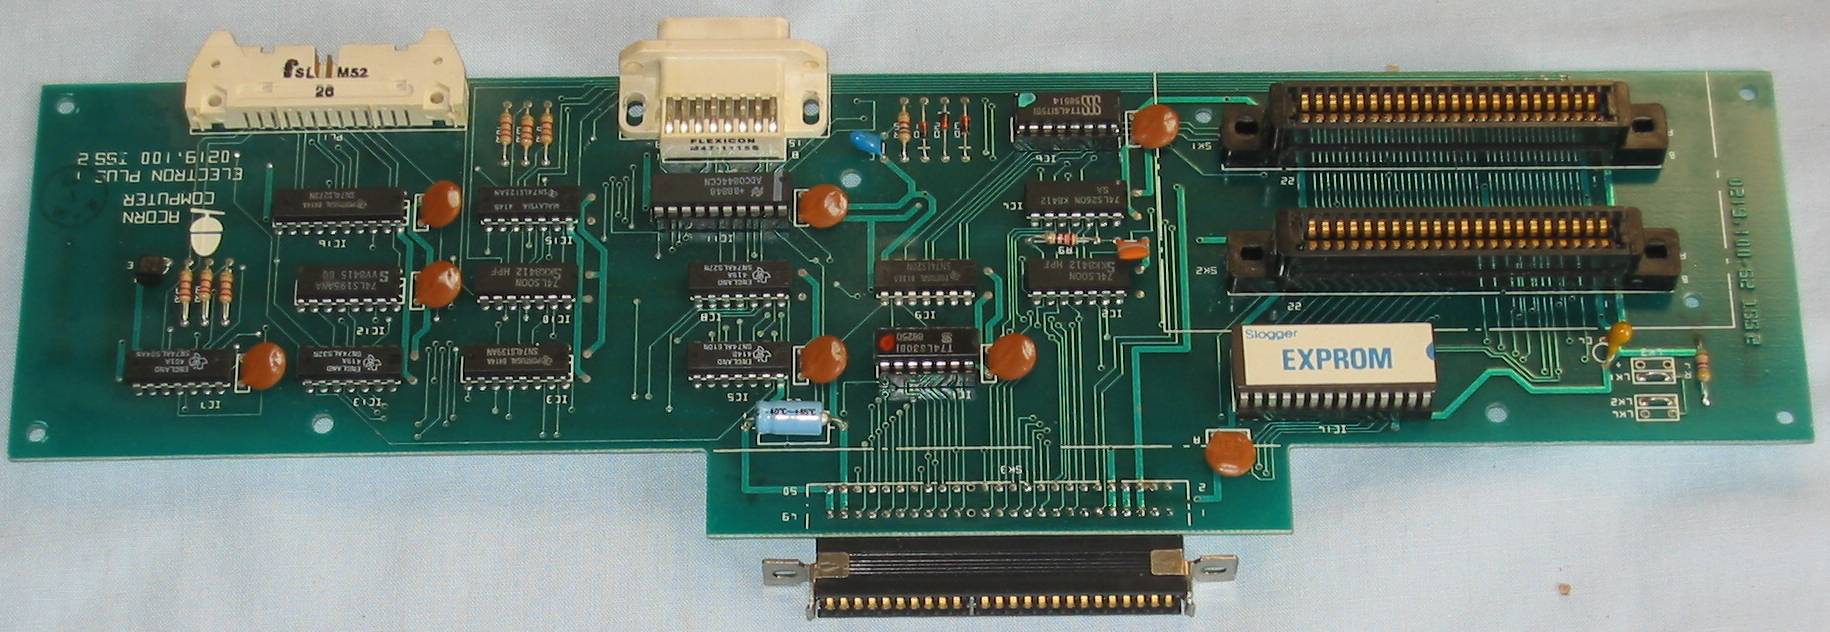 Acorn Plus 1 circuit board HiRes